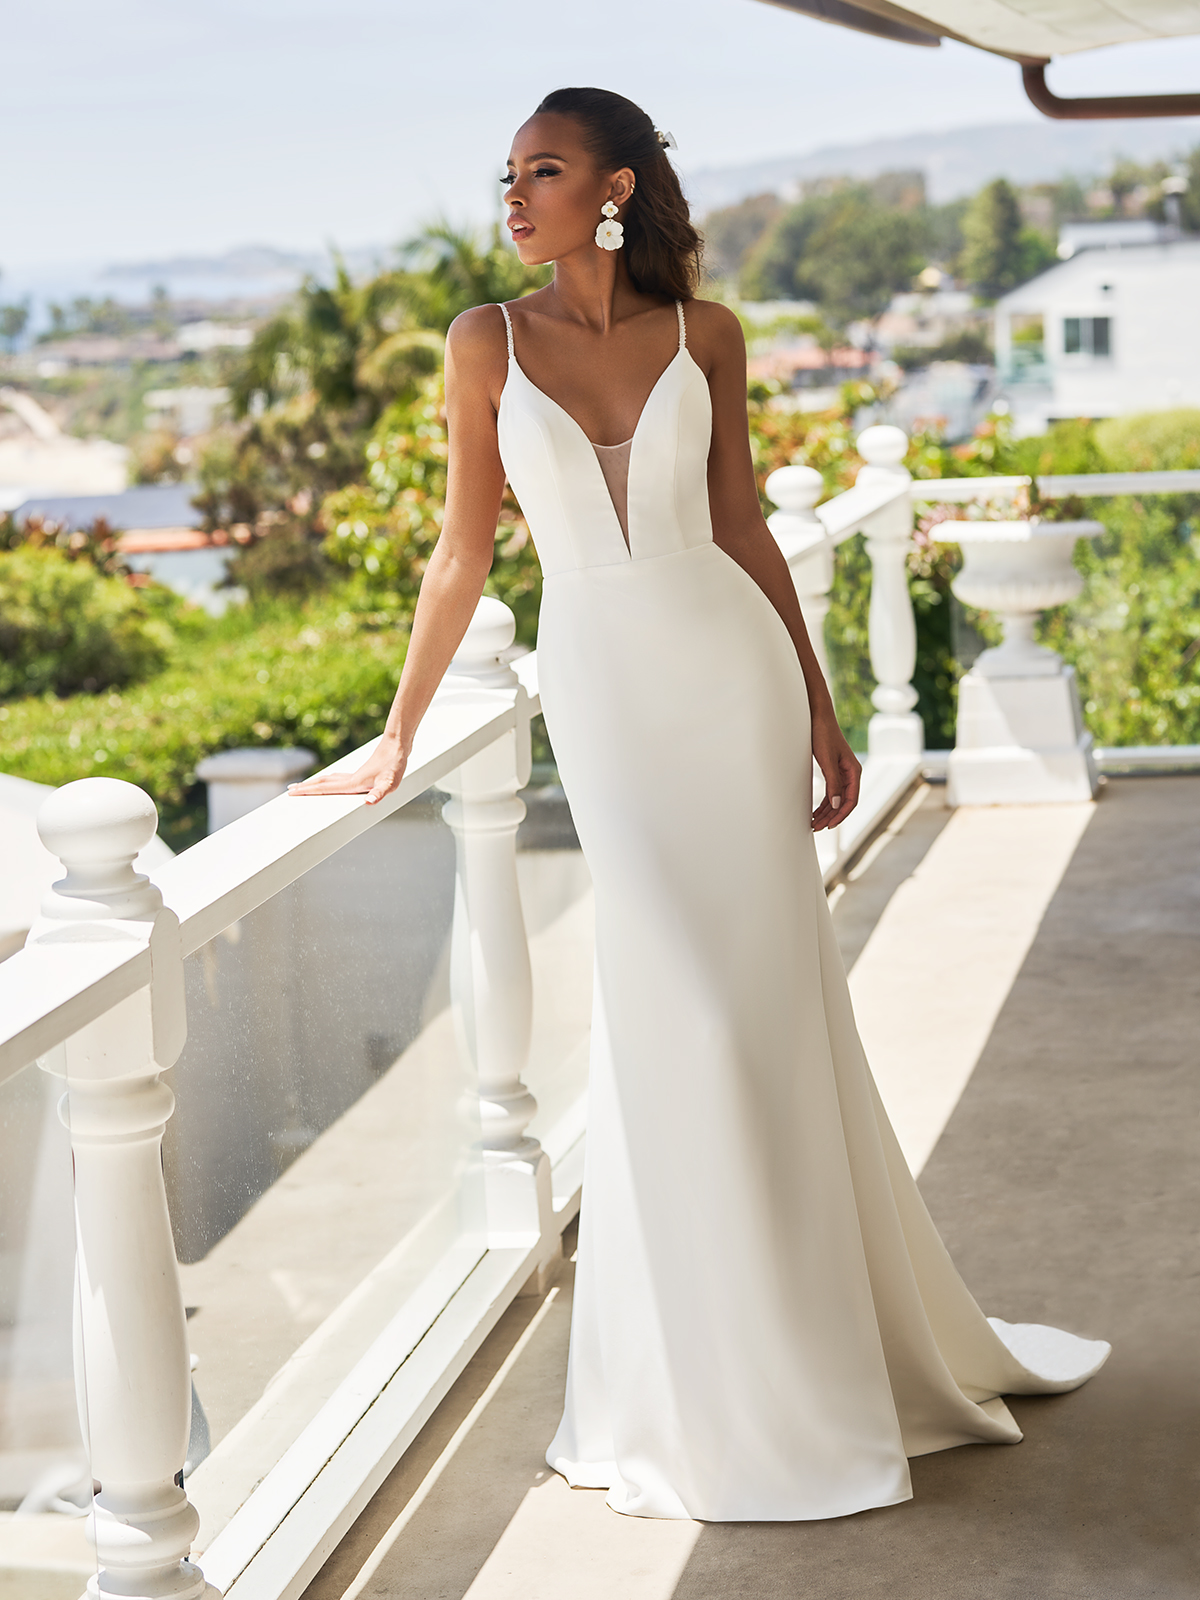 Simple And Elegant Wedding Dresses Wedding Inspiration Moonlight Blog 8896